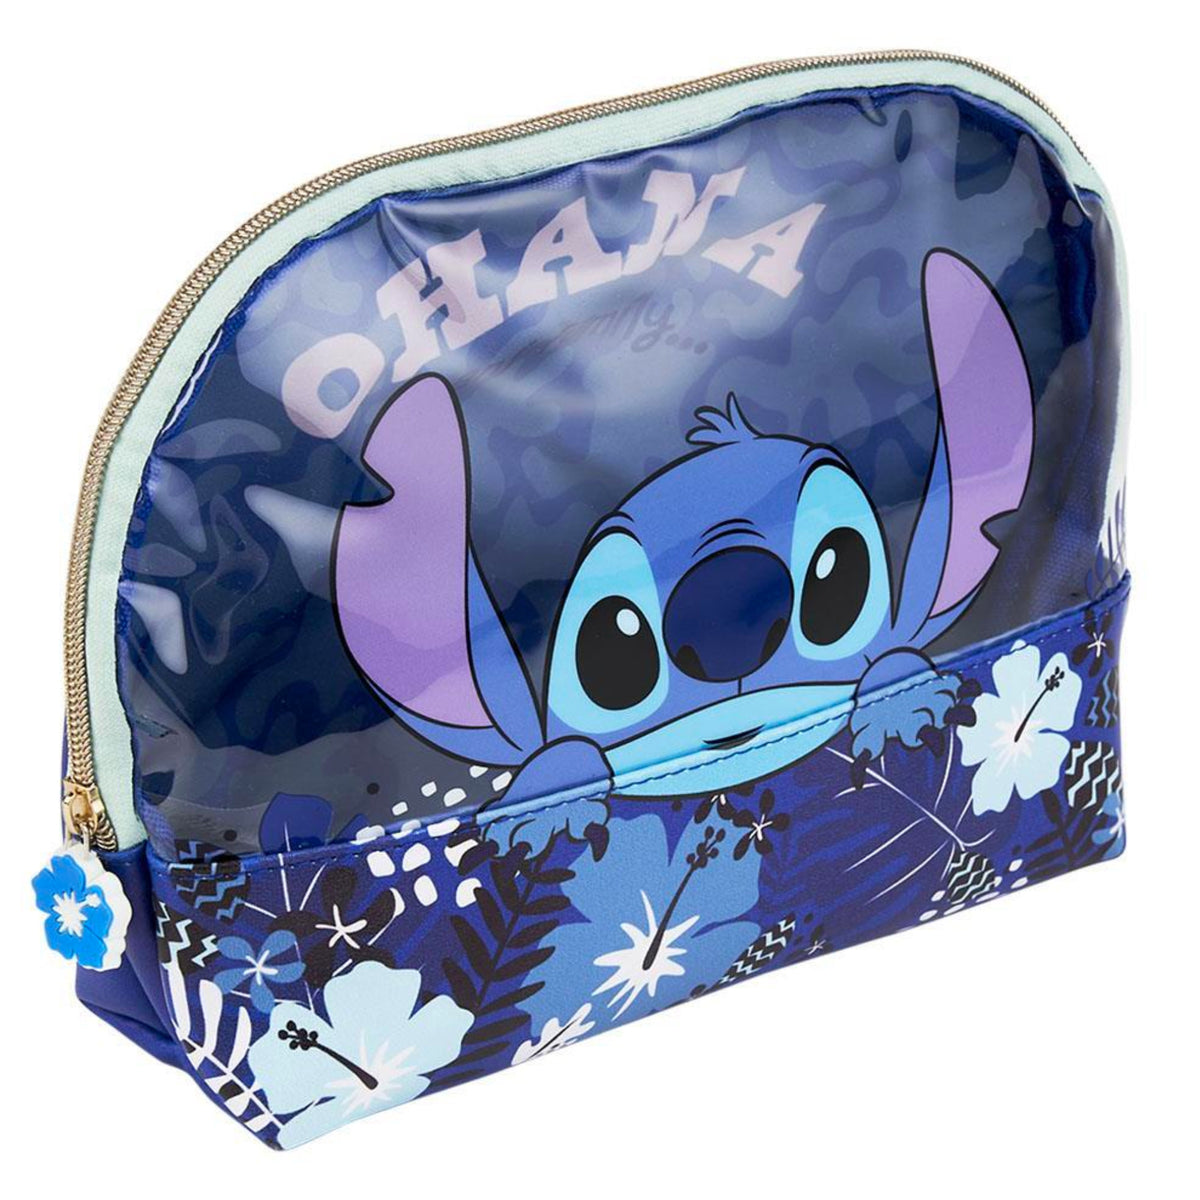 Stitch Travel Bag